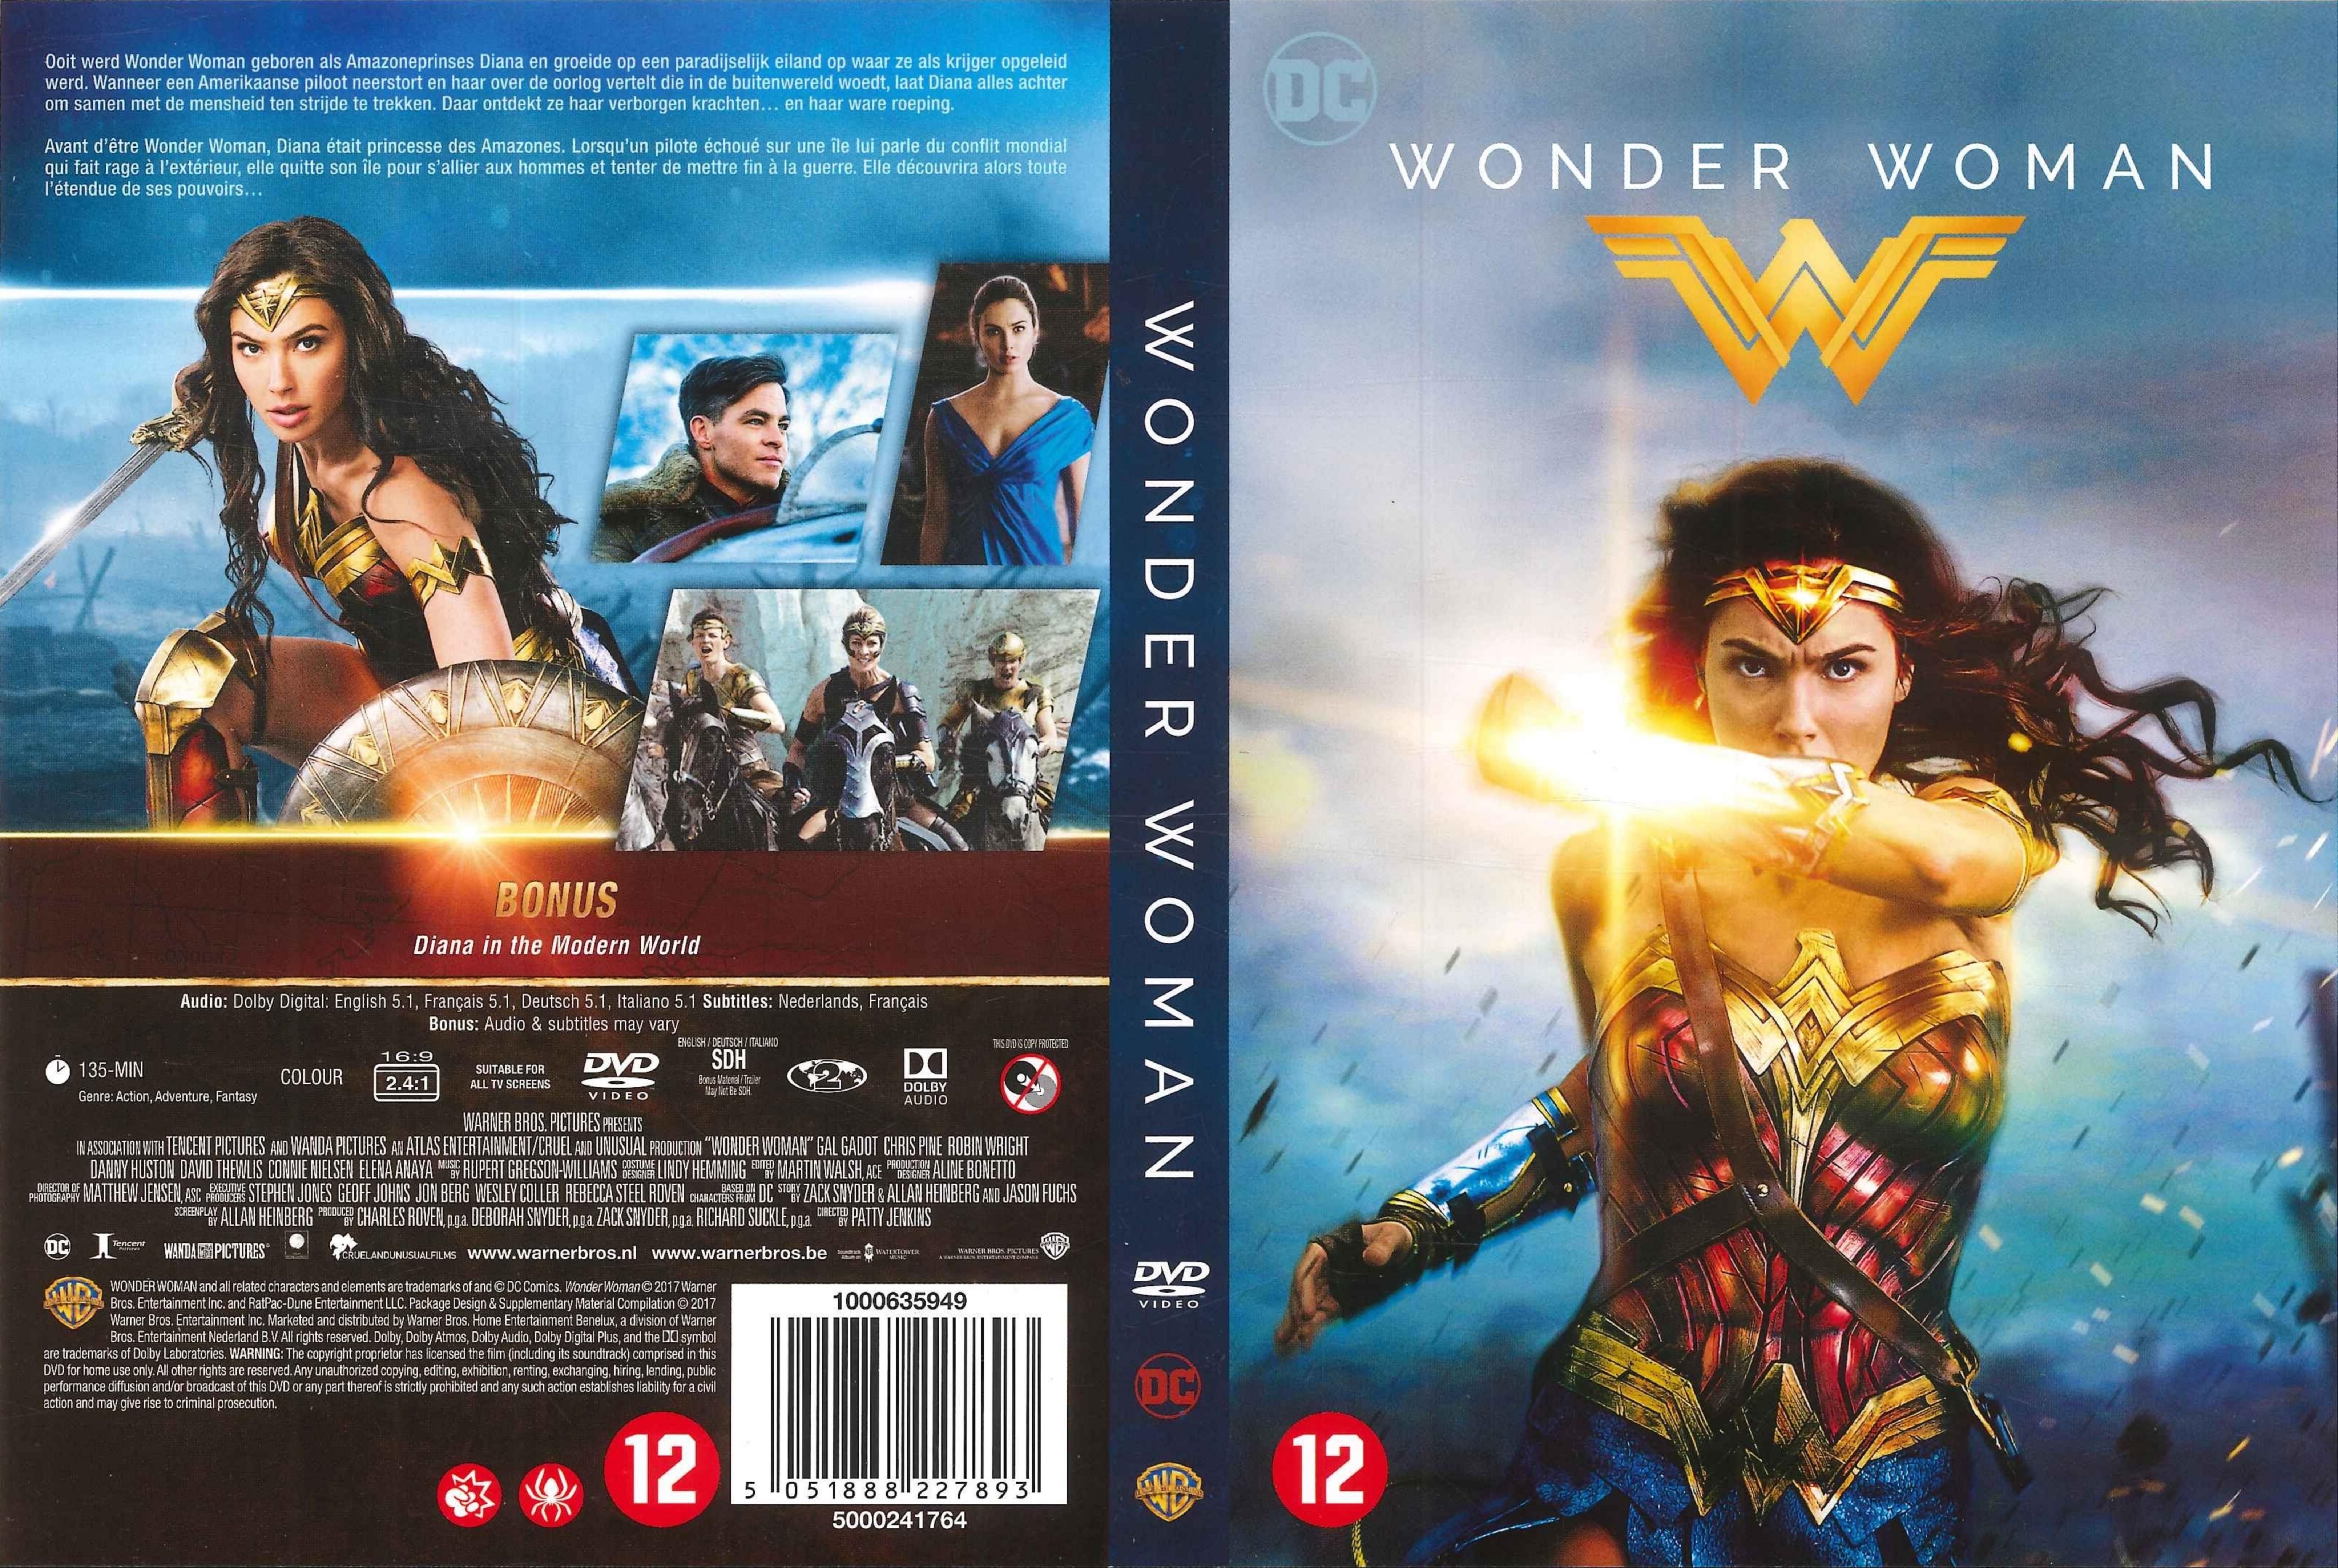 Jaquette DVD Wonder Woman v3